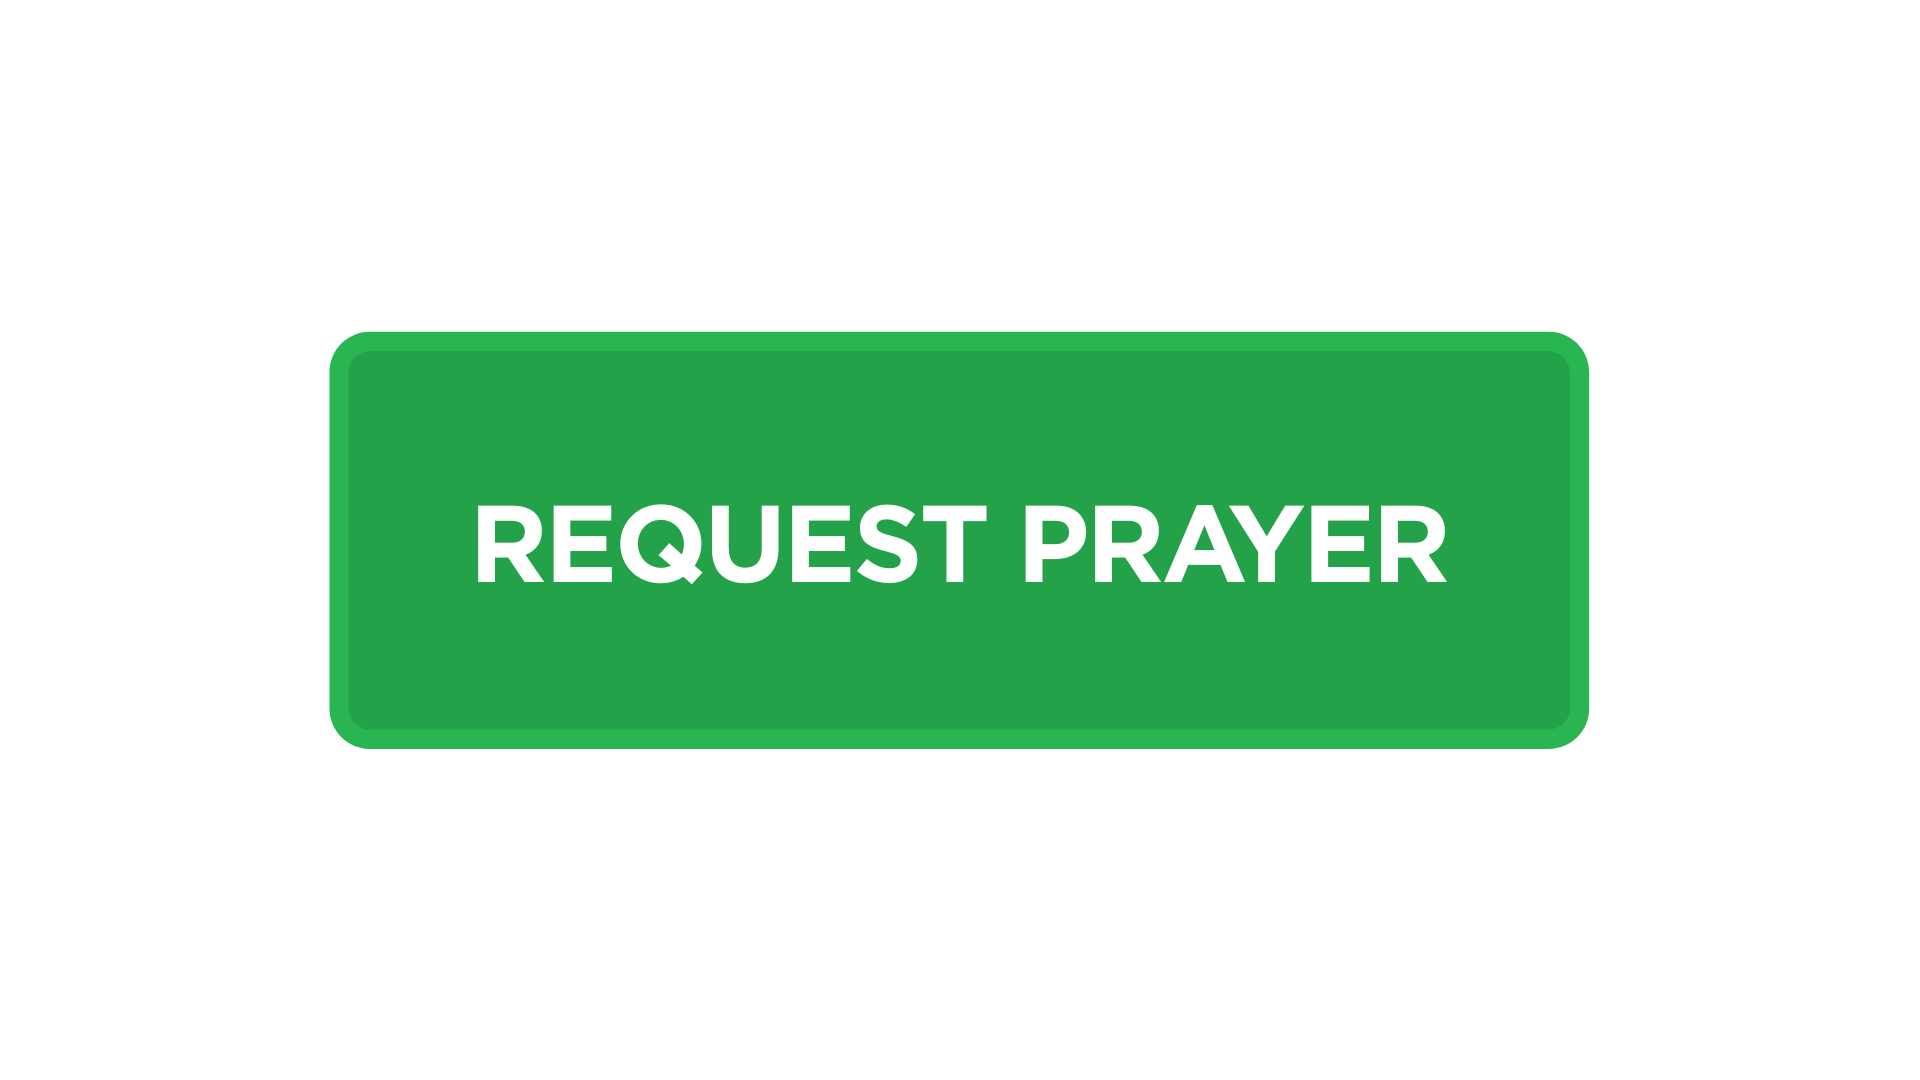 REQUEST PRAYER